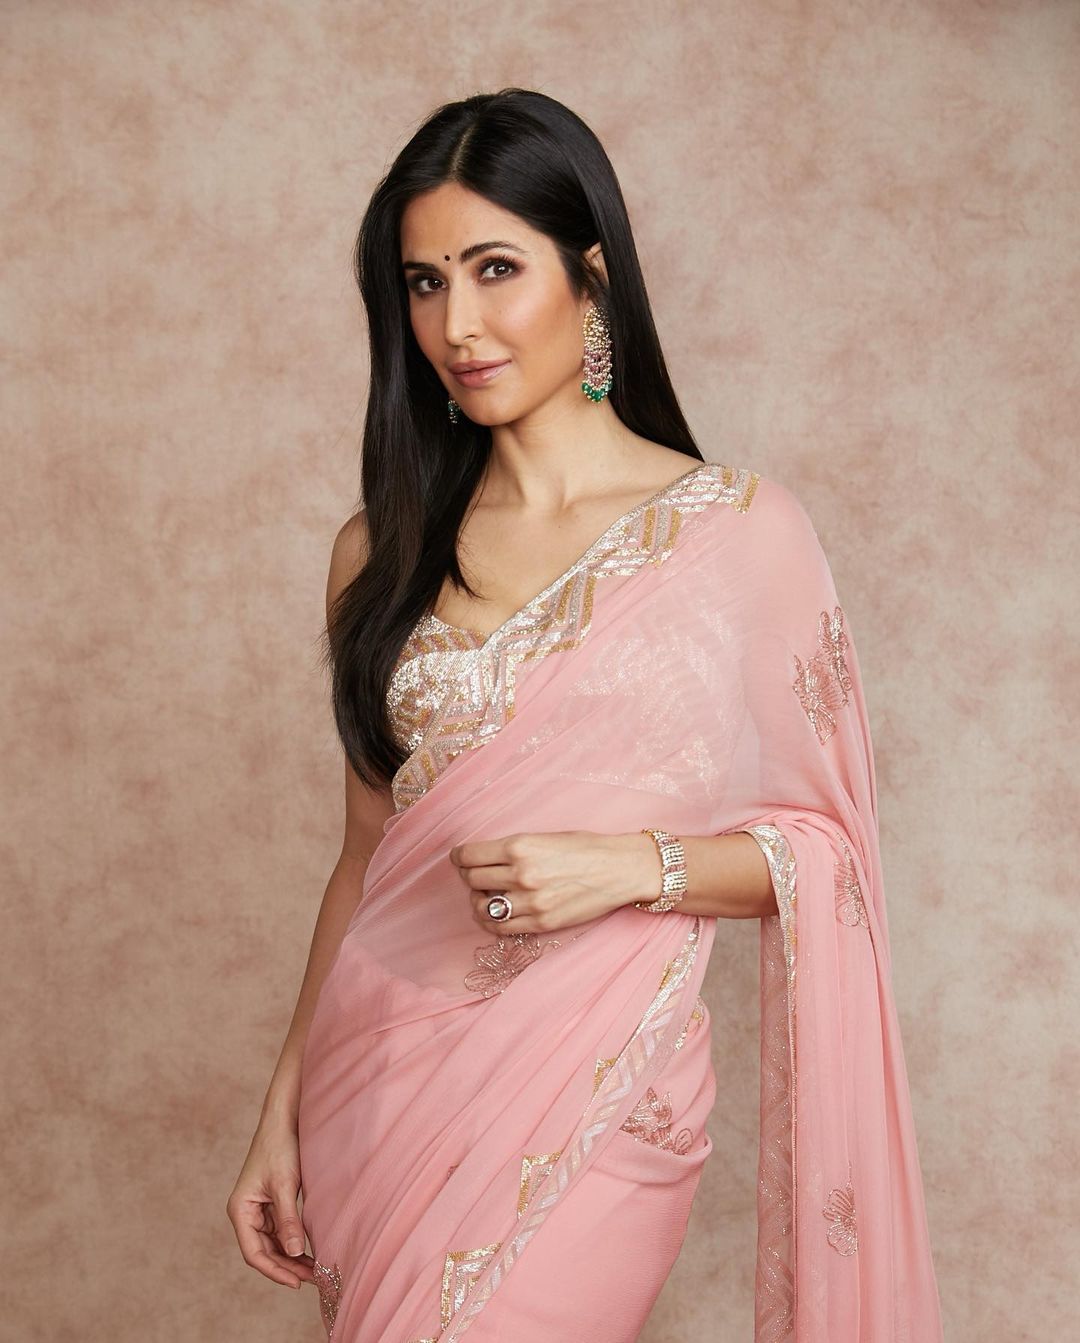 Katrina Kaif wearing a beautiful pink Chiffon saree with intricate embroidery and jewelry